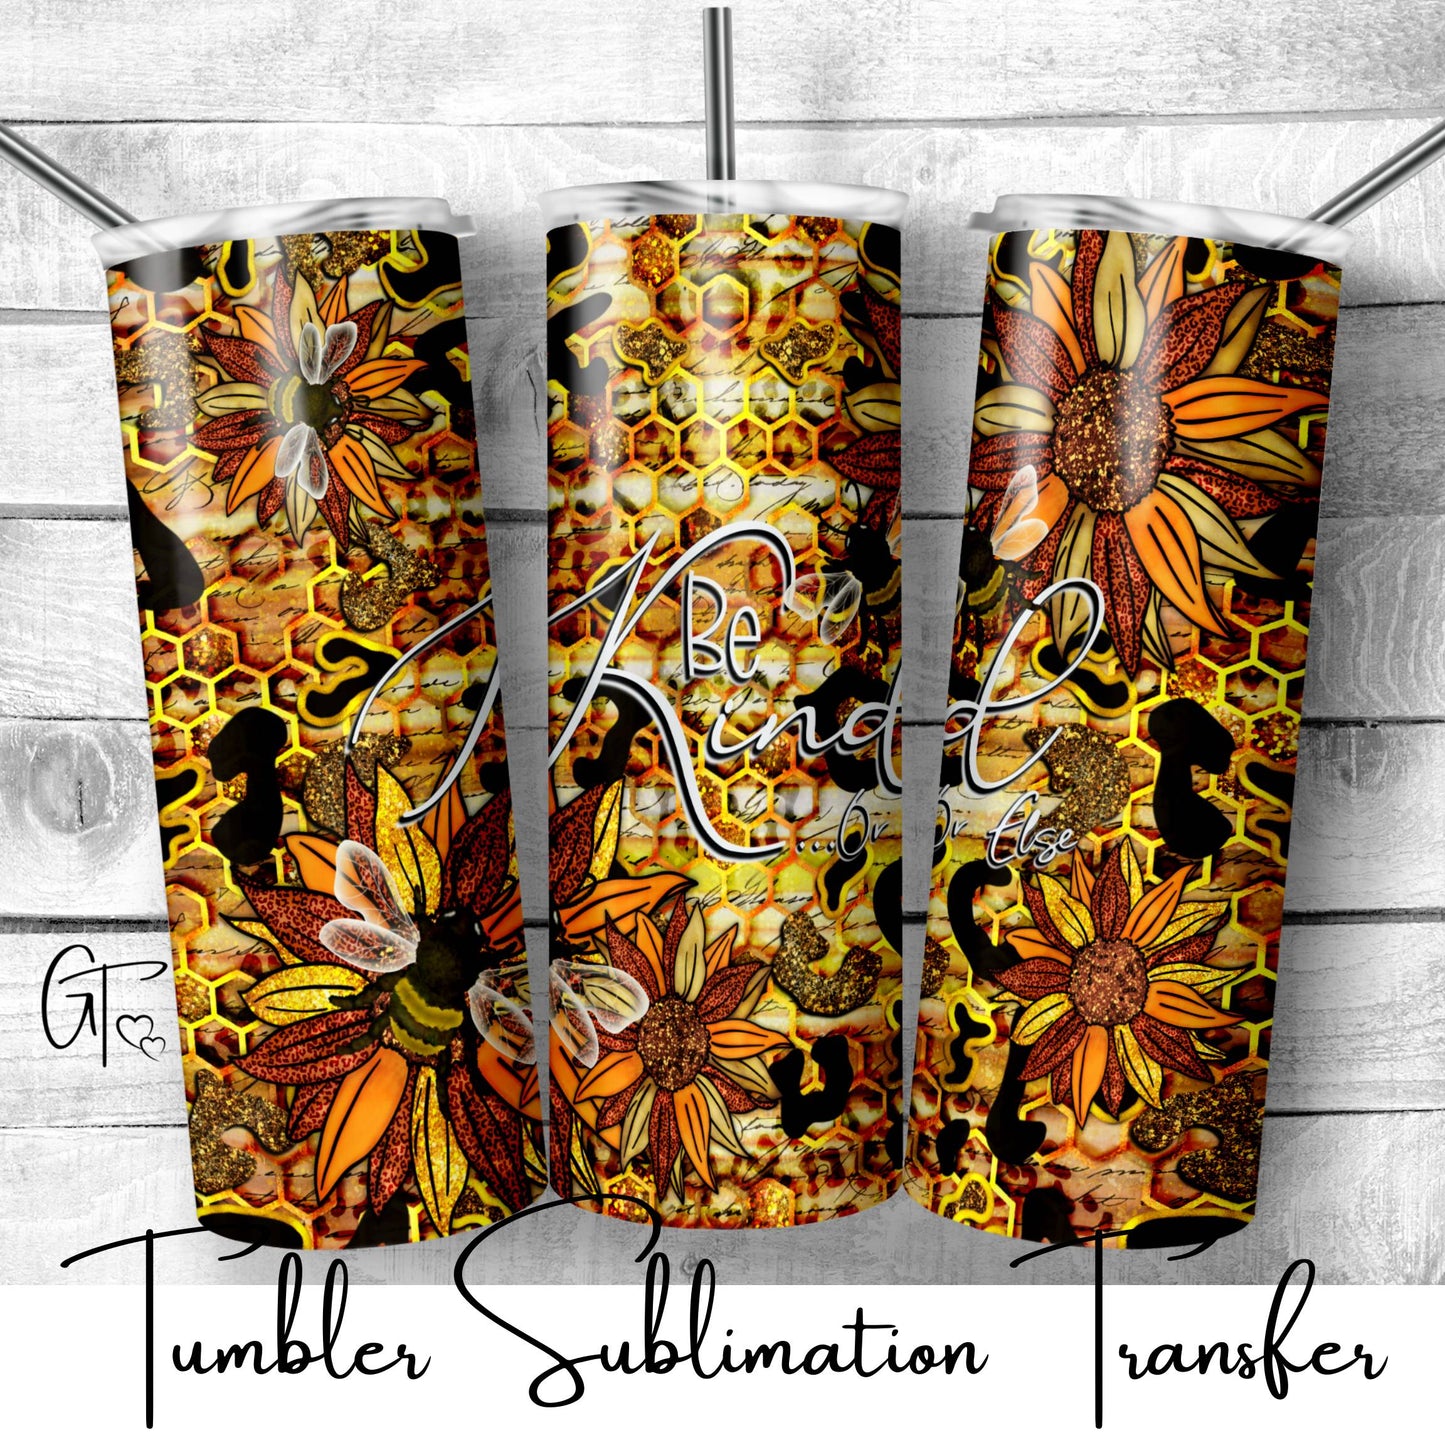 SUB801 Be Kind Honey Bee Tumbler Sublimation Transfer